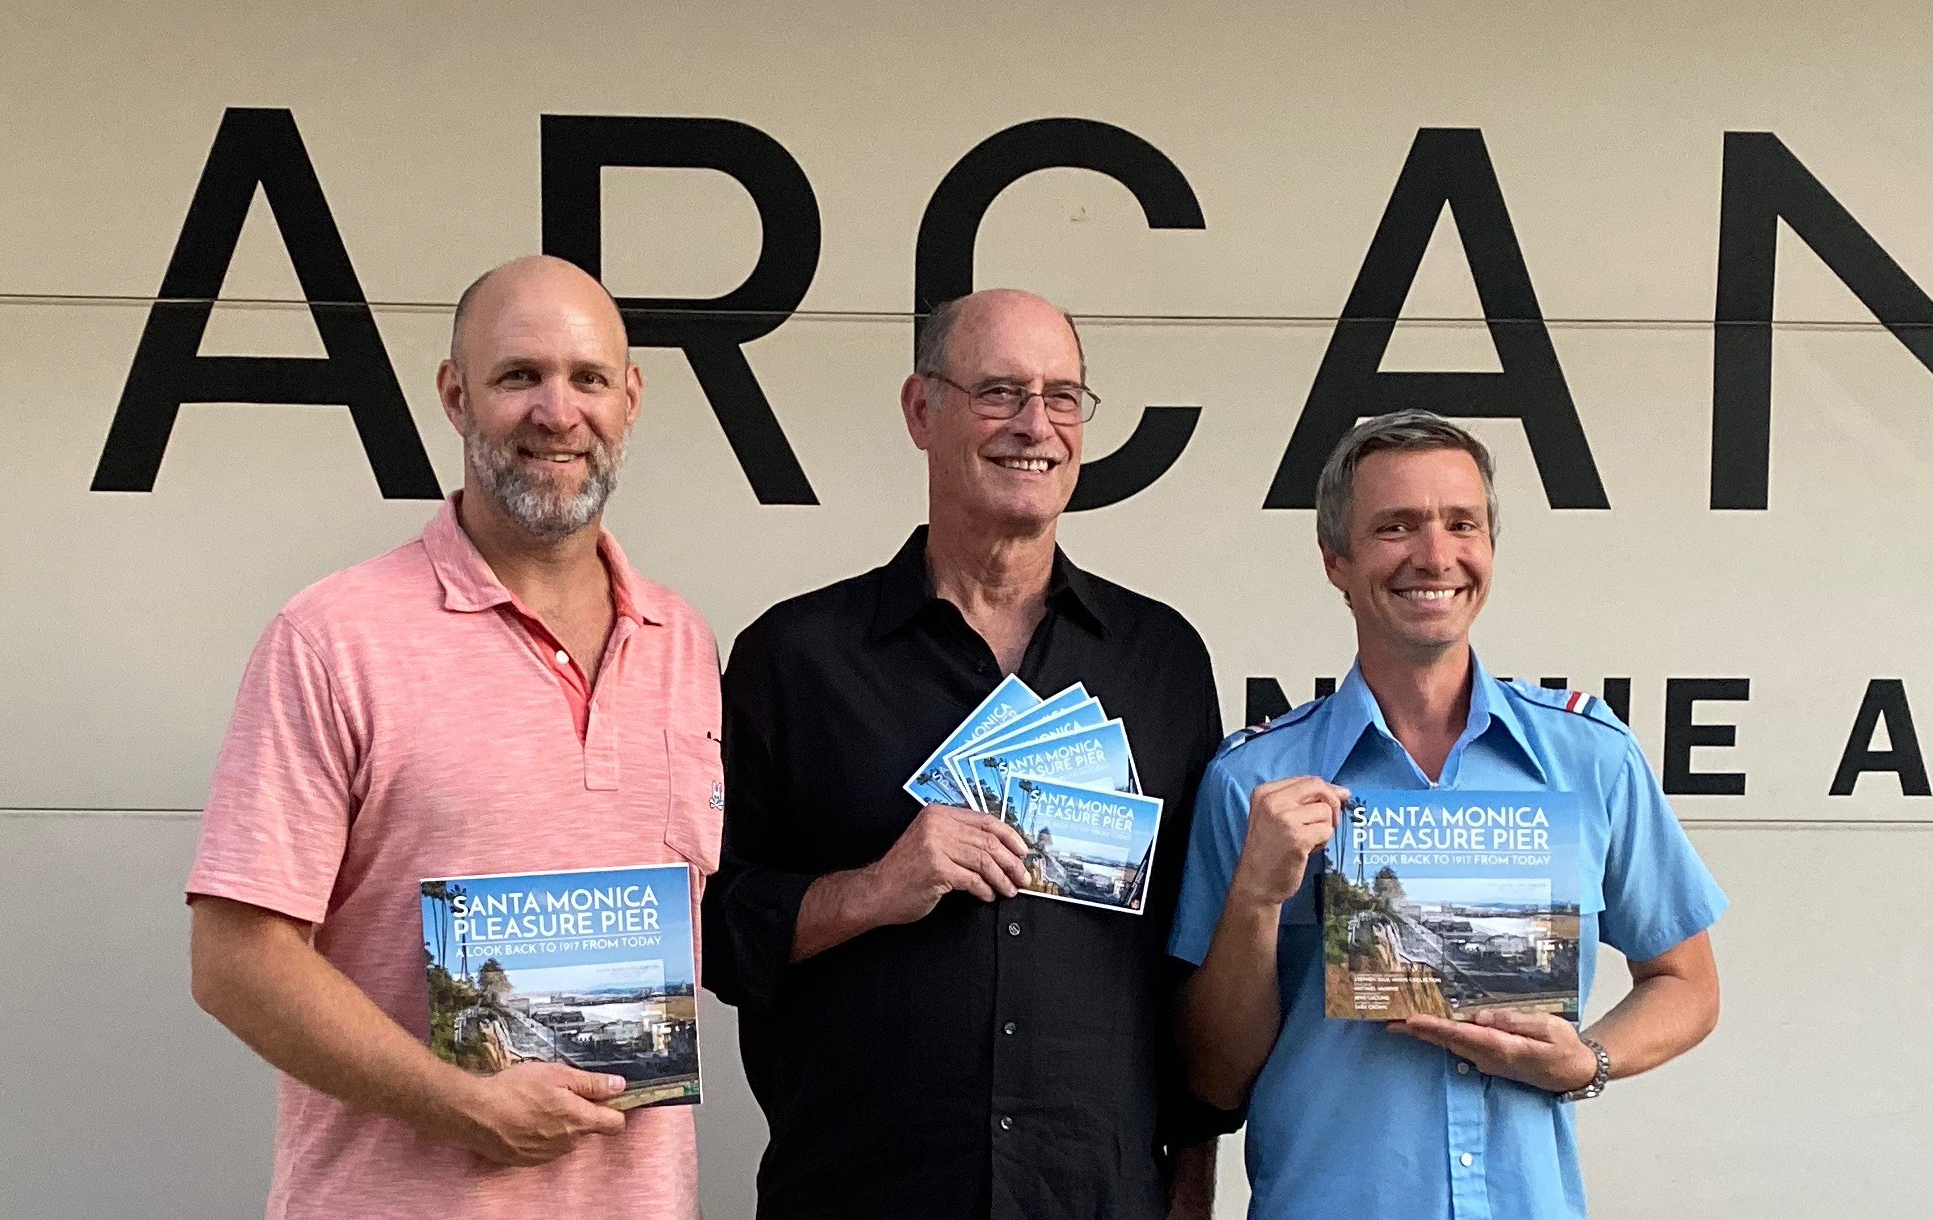 Group photo of Michael Murphy, Stephen Anaya, Jens Lucking holding their book "Santa Monica Pleasure Pier"